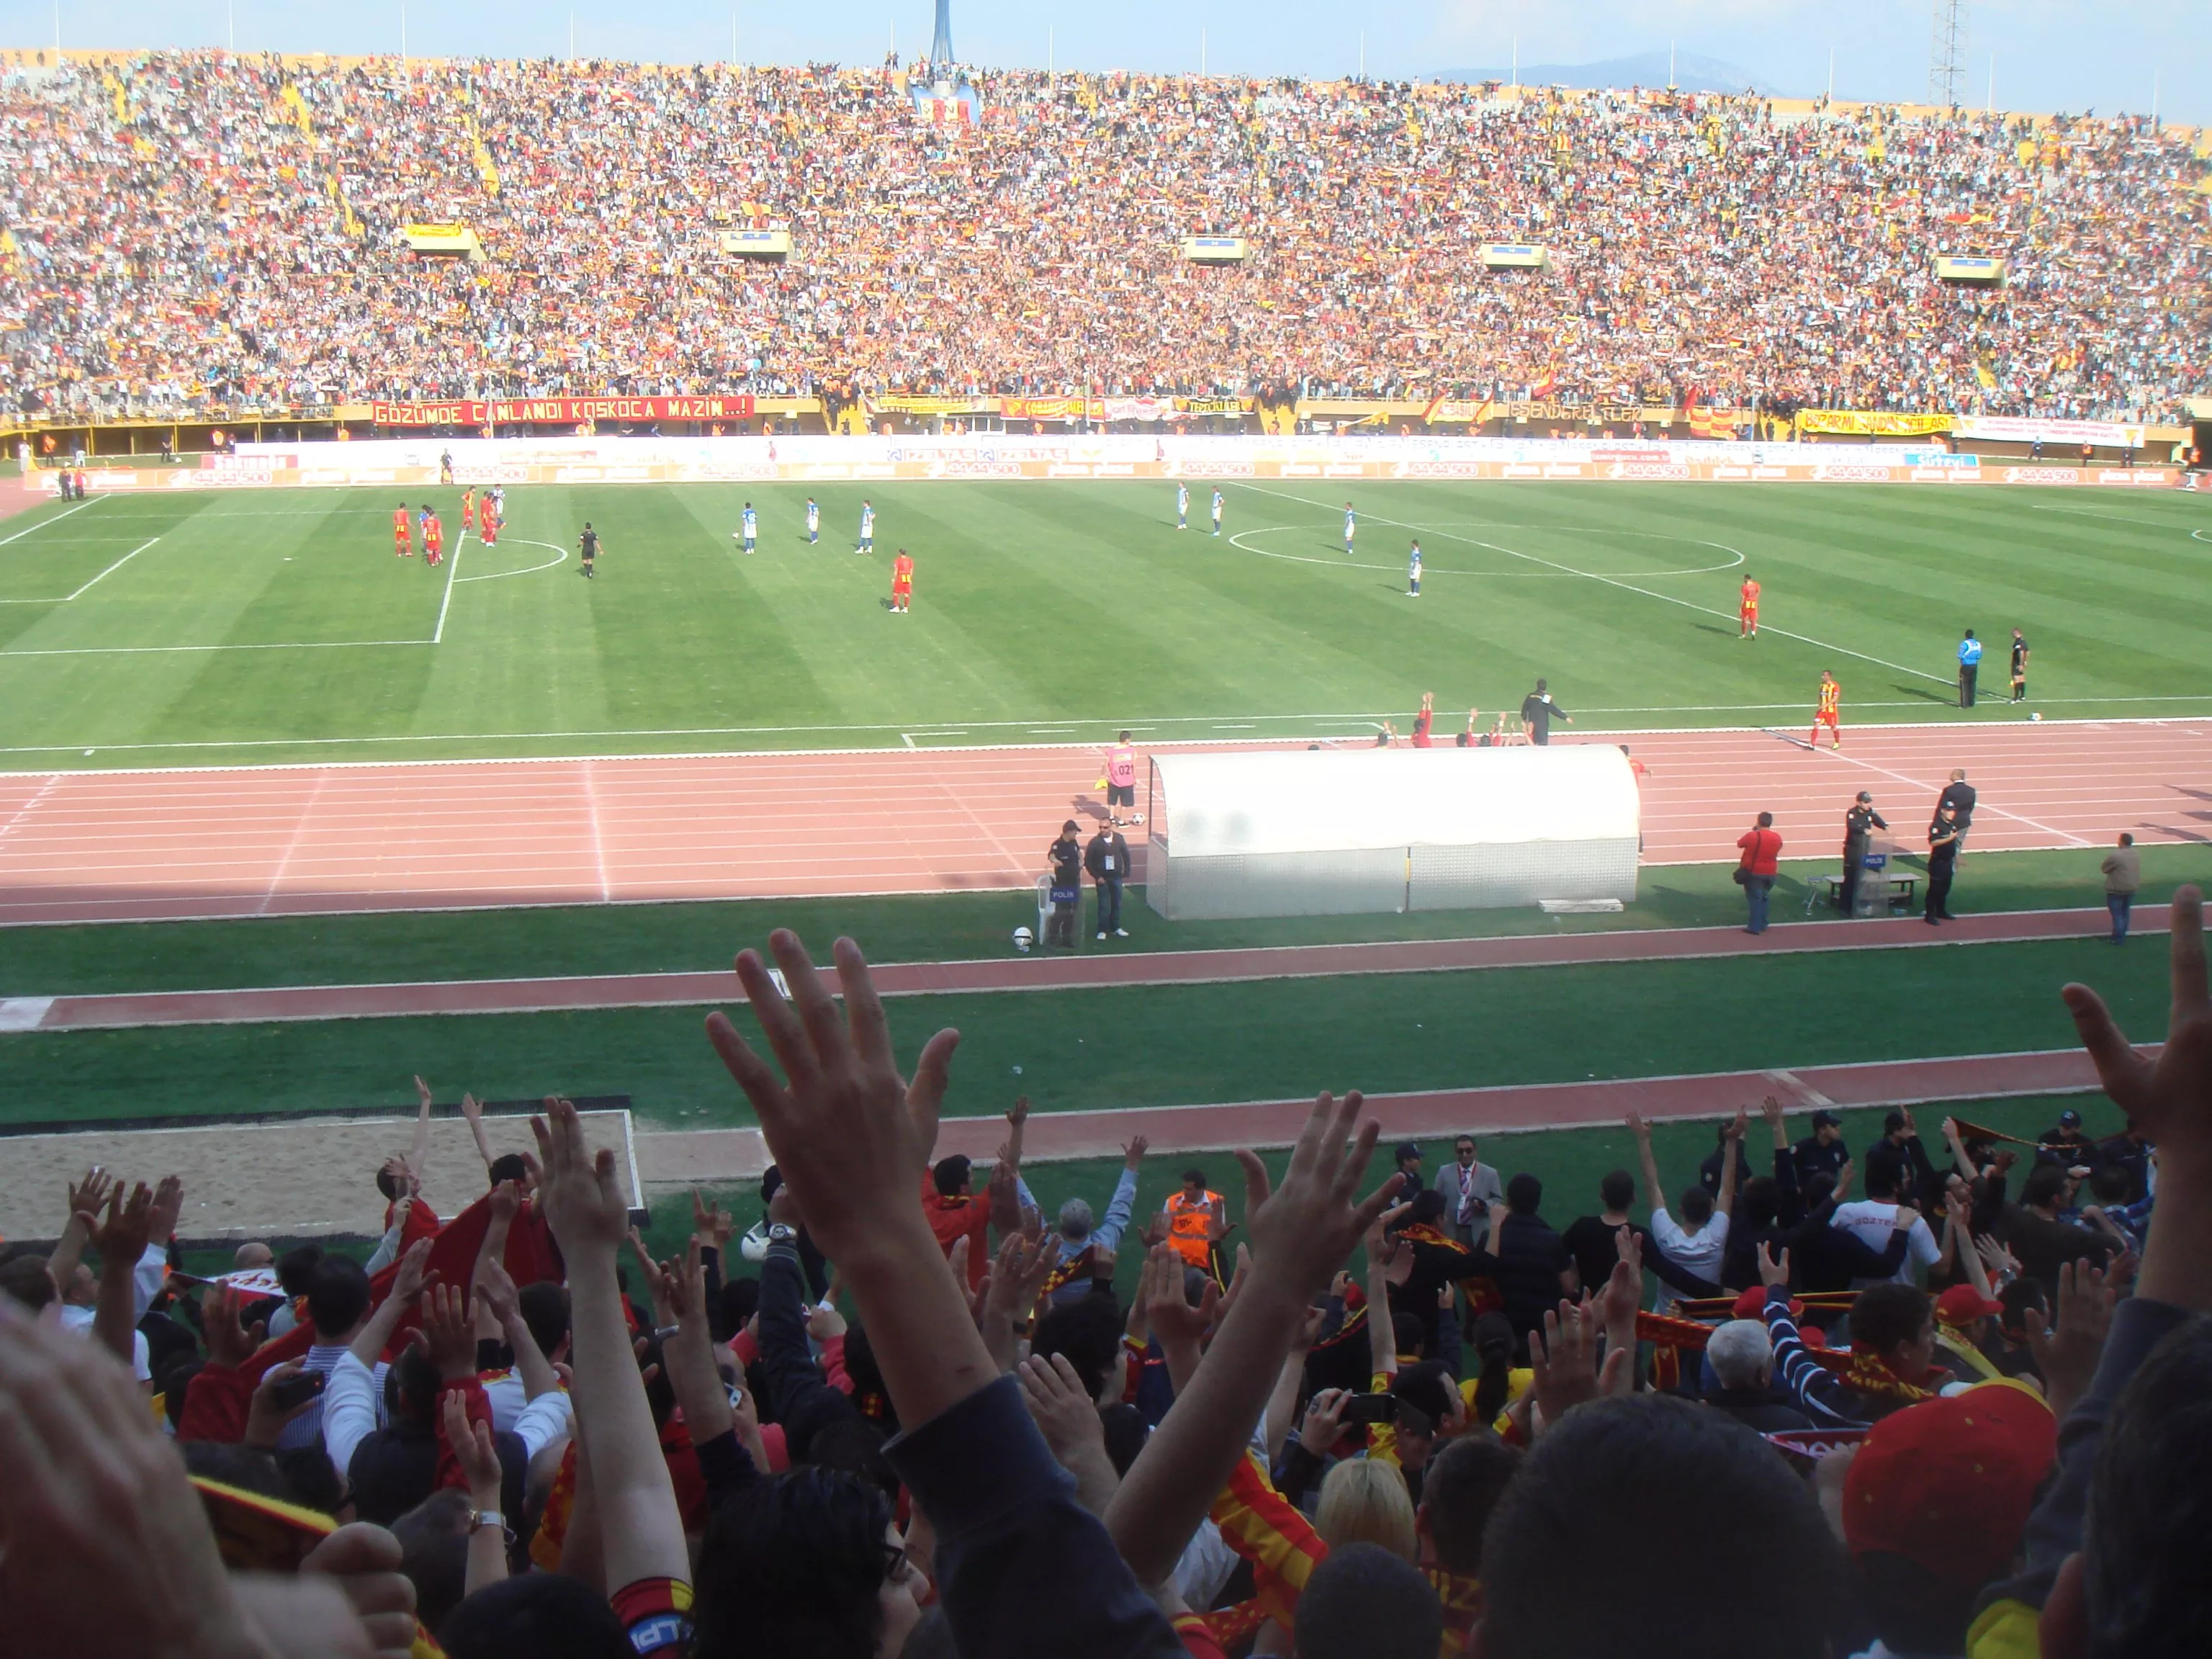 İzmir Ataturk Stadium in Turkey, Central Asia | Football - Rated 3.3